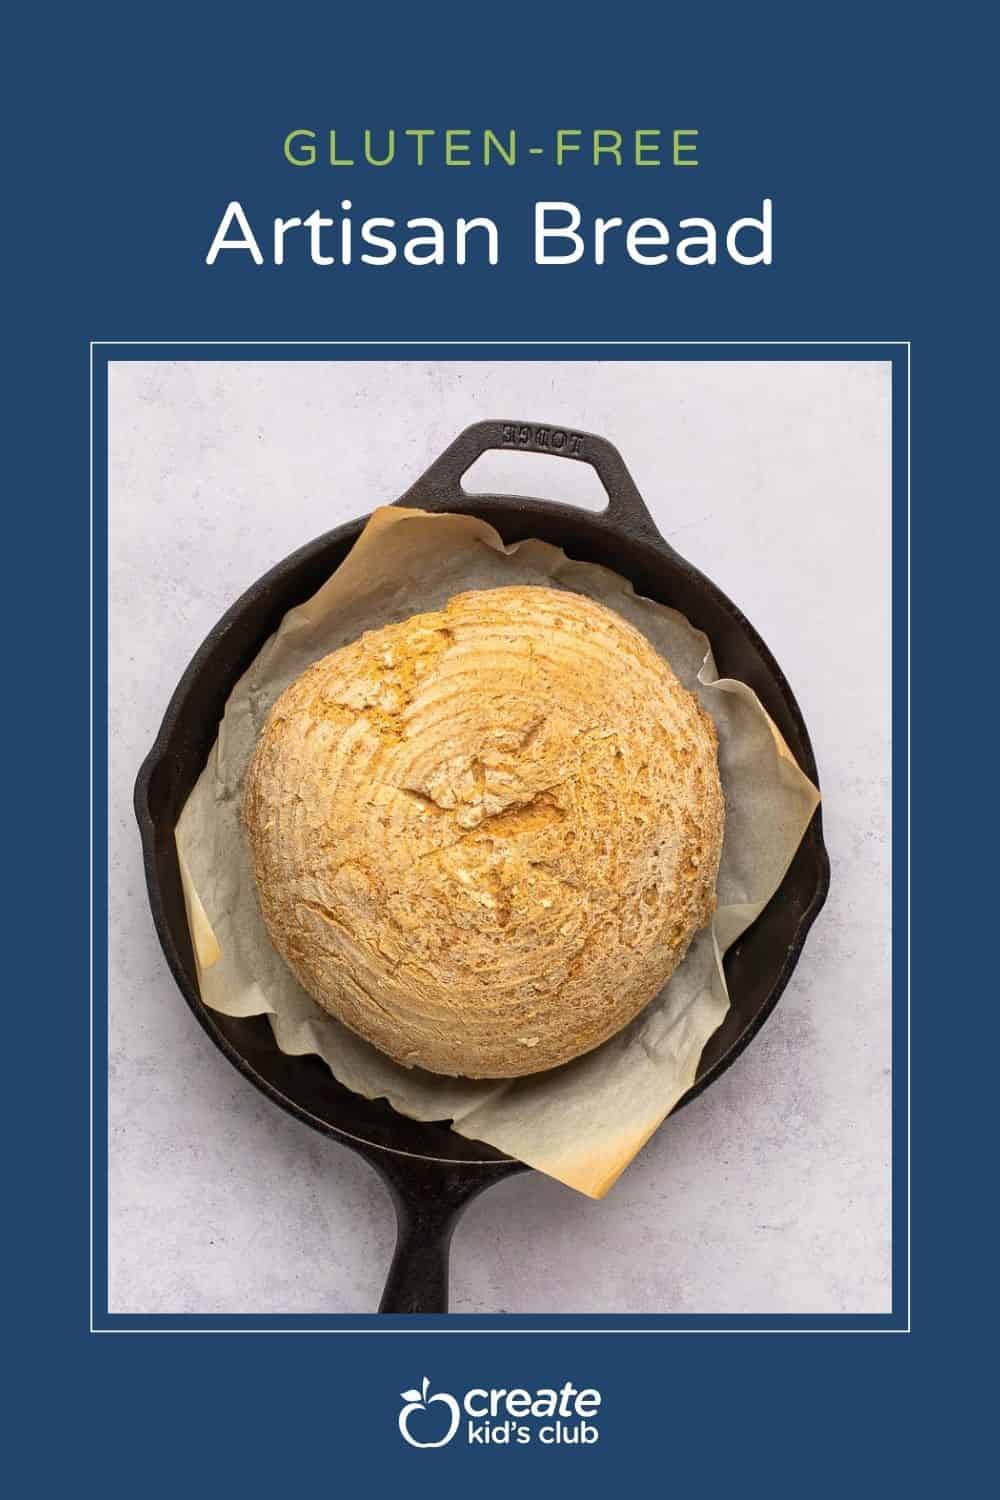 Pin of gluten free artisan bread loaf